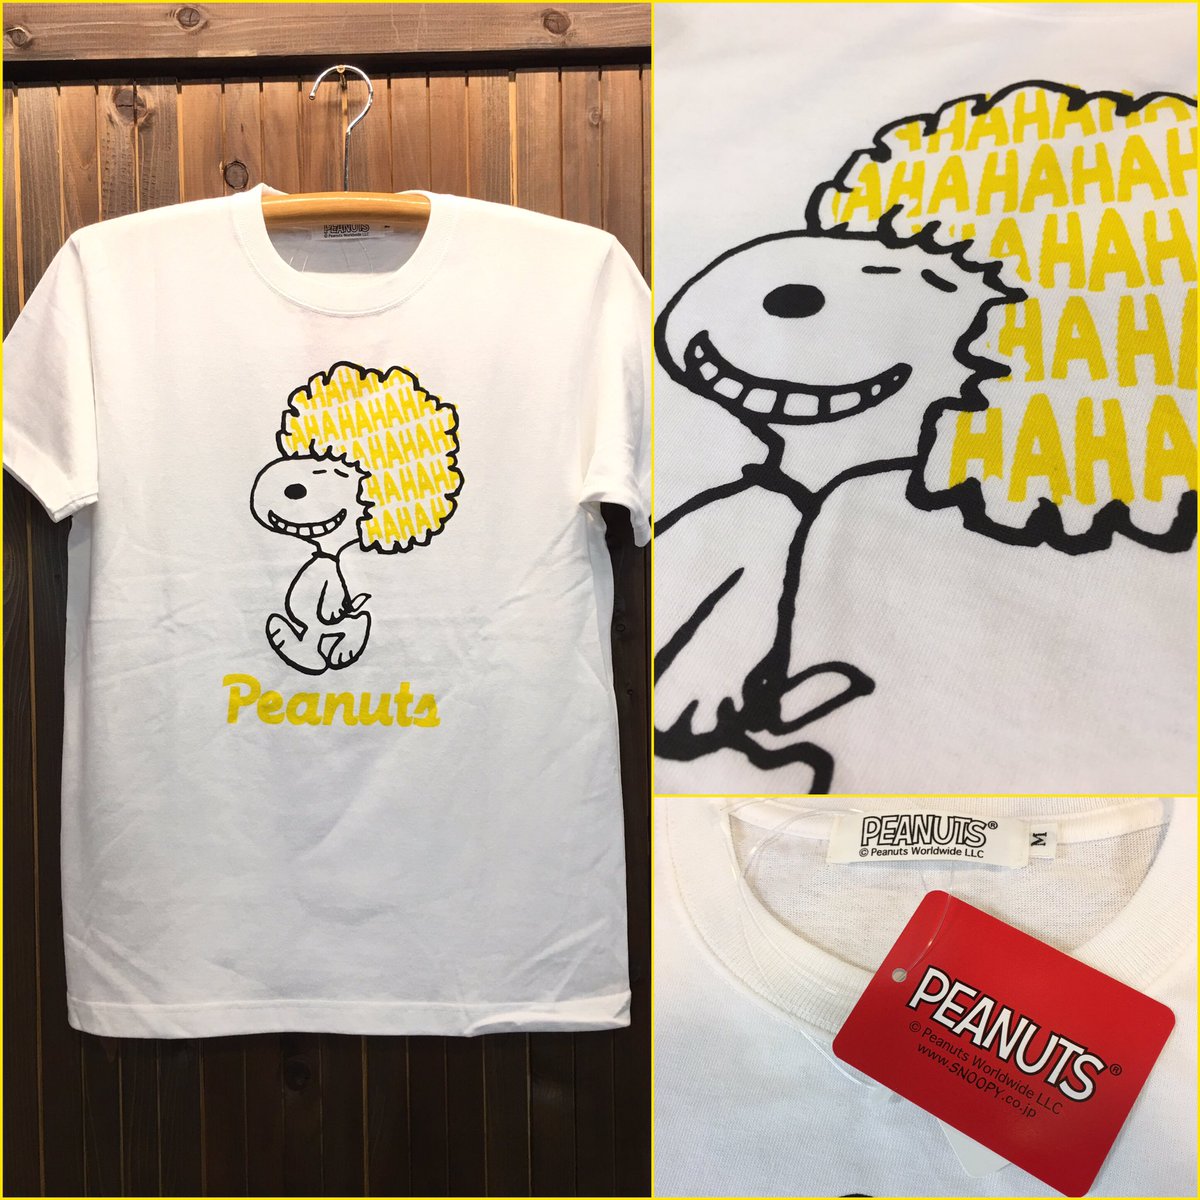 Garakuta合衆国 در توییتر ちょっと意地悪そうな表情の アフロ スヌーピー Tシャツ入荷です コラボtシャツ Houston Joeyfactory Peanuts Snoopy アフロのスヌーピー